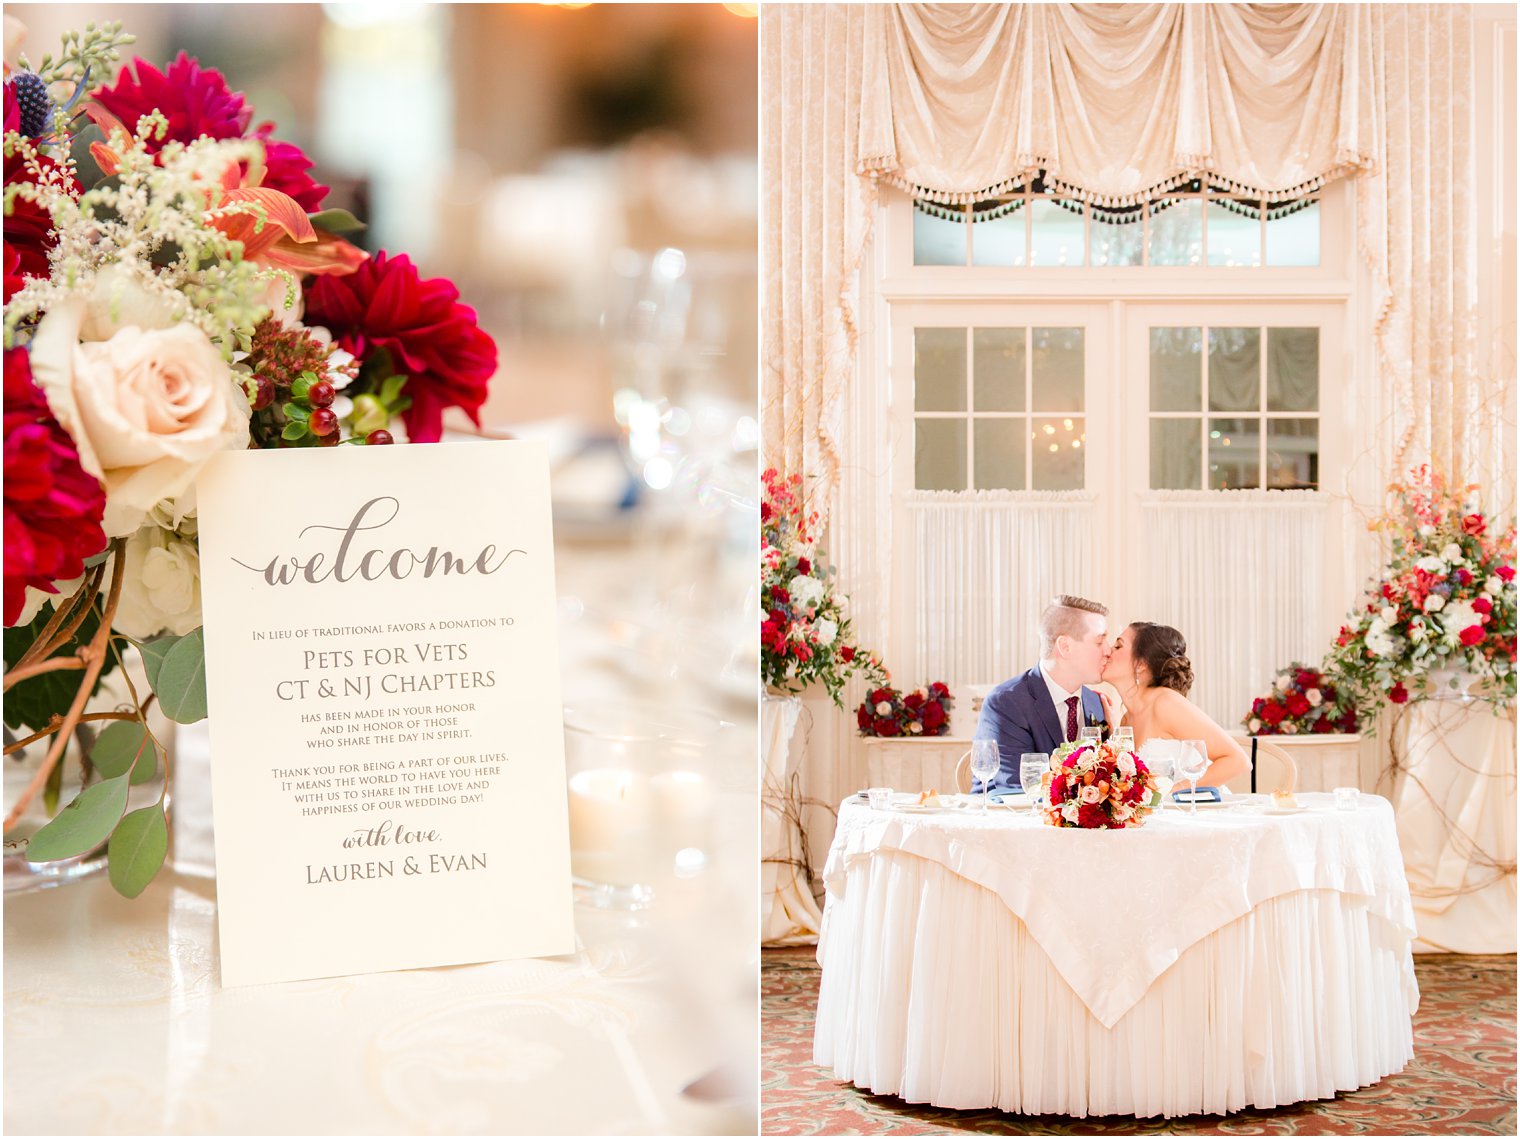 Wedding reception at Meadow Wood Manor | Photos by NJ Wedding Photographers Idalia Photography